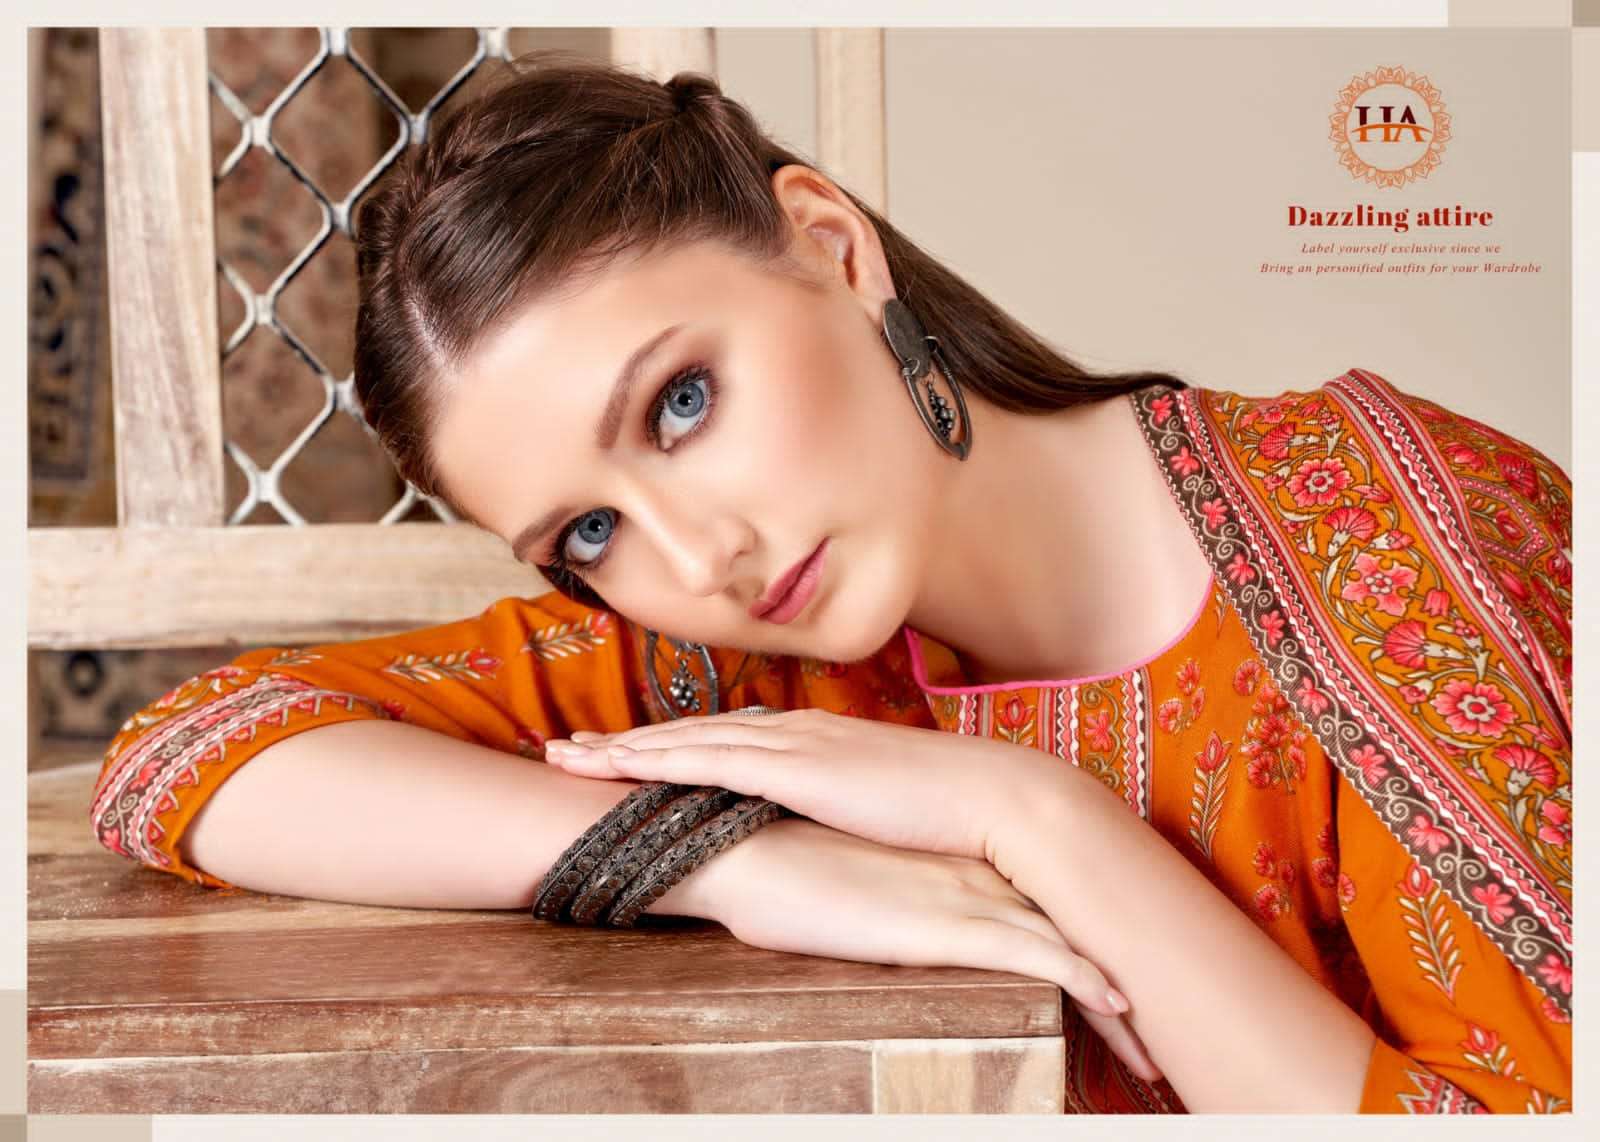 harshit fashion rubika latest designer pakistani salwar kameez wholesaler surat gujarat